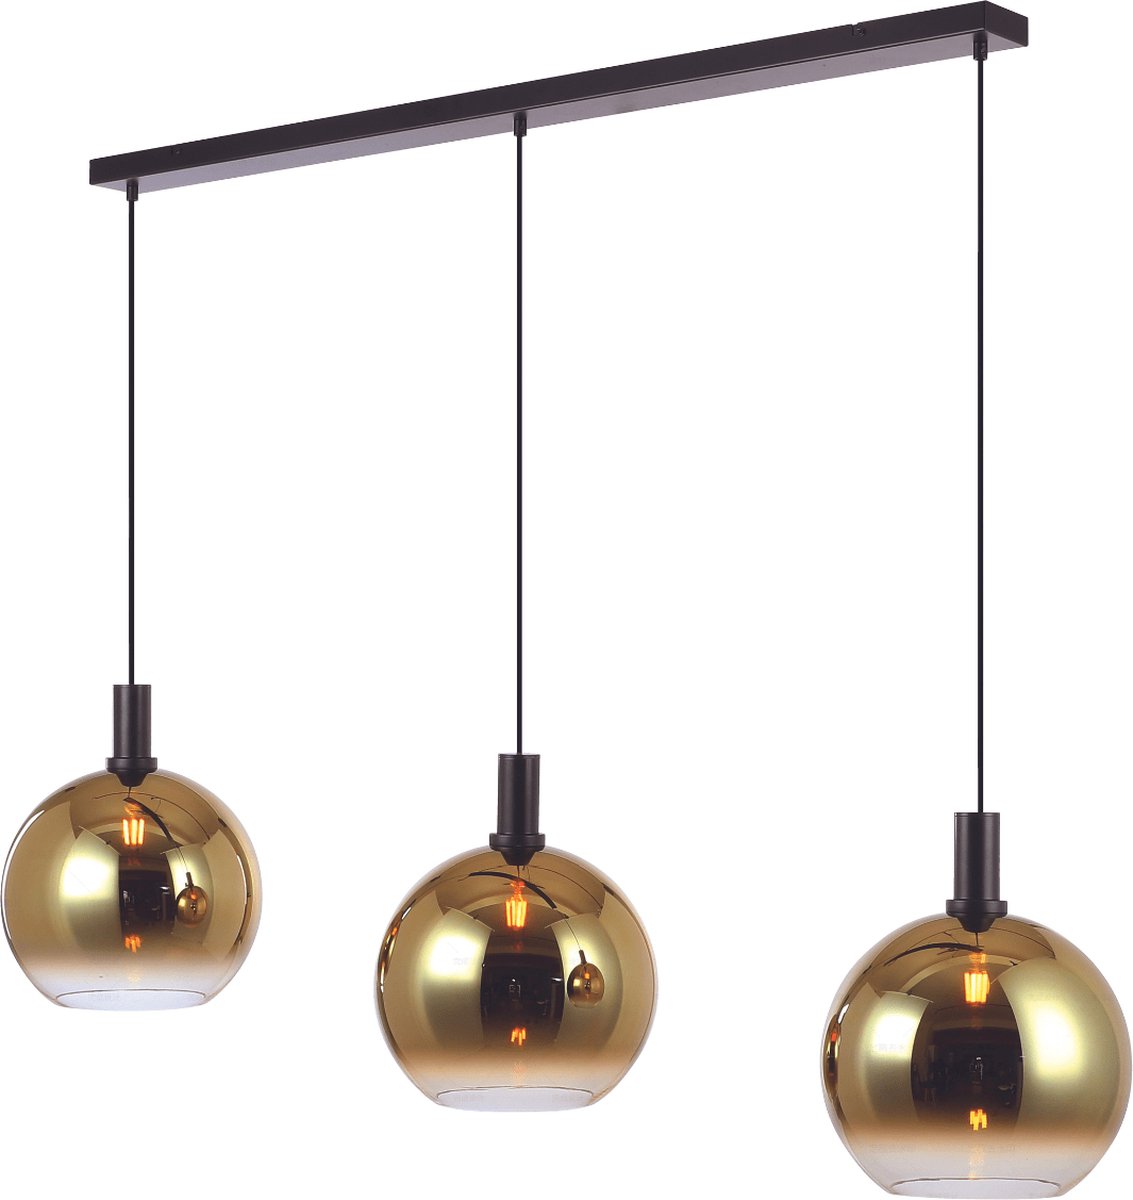 Justine hanglamp 3L 120 cm glas goud